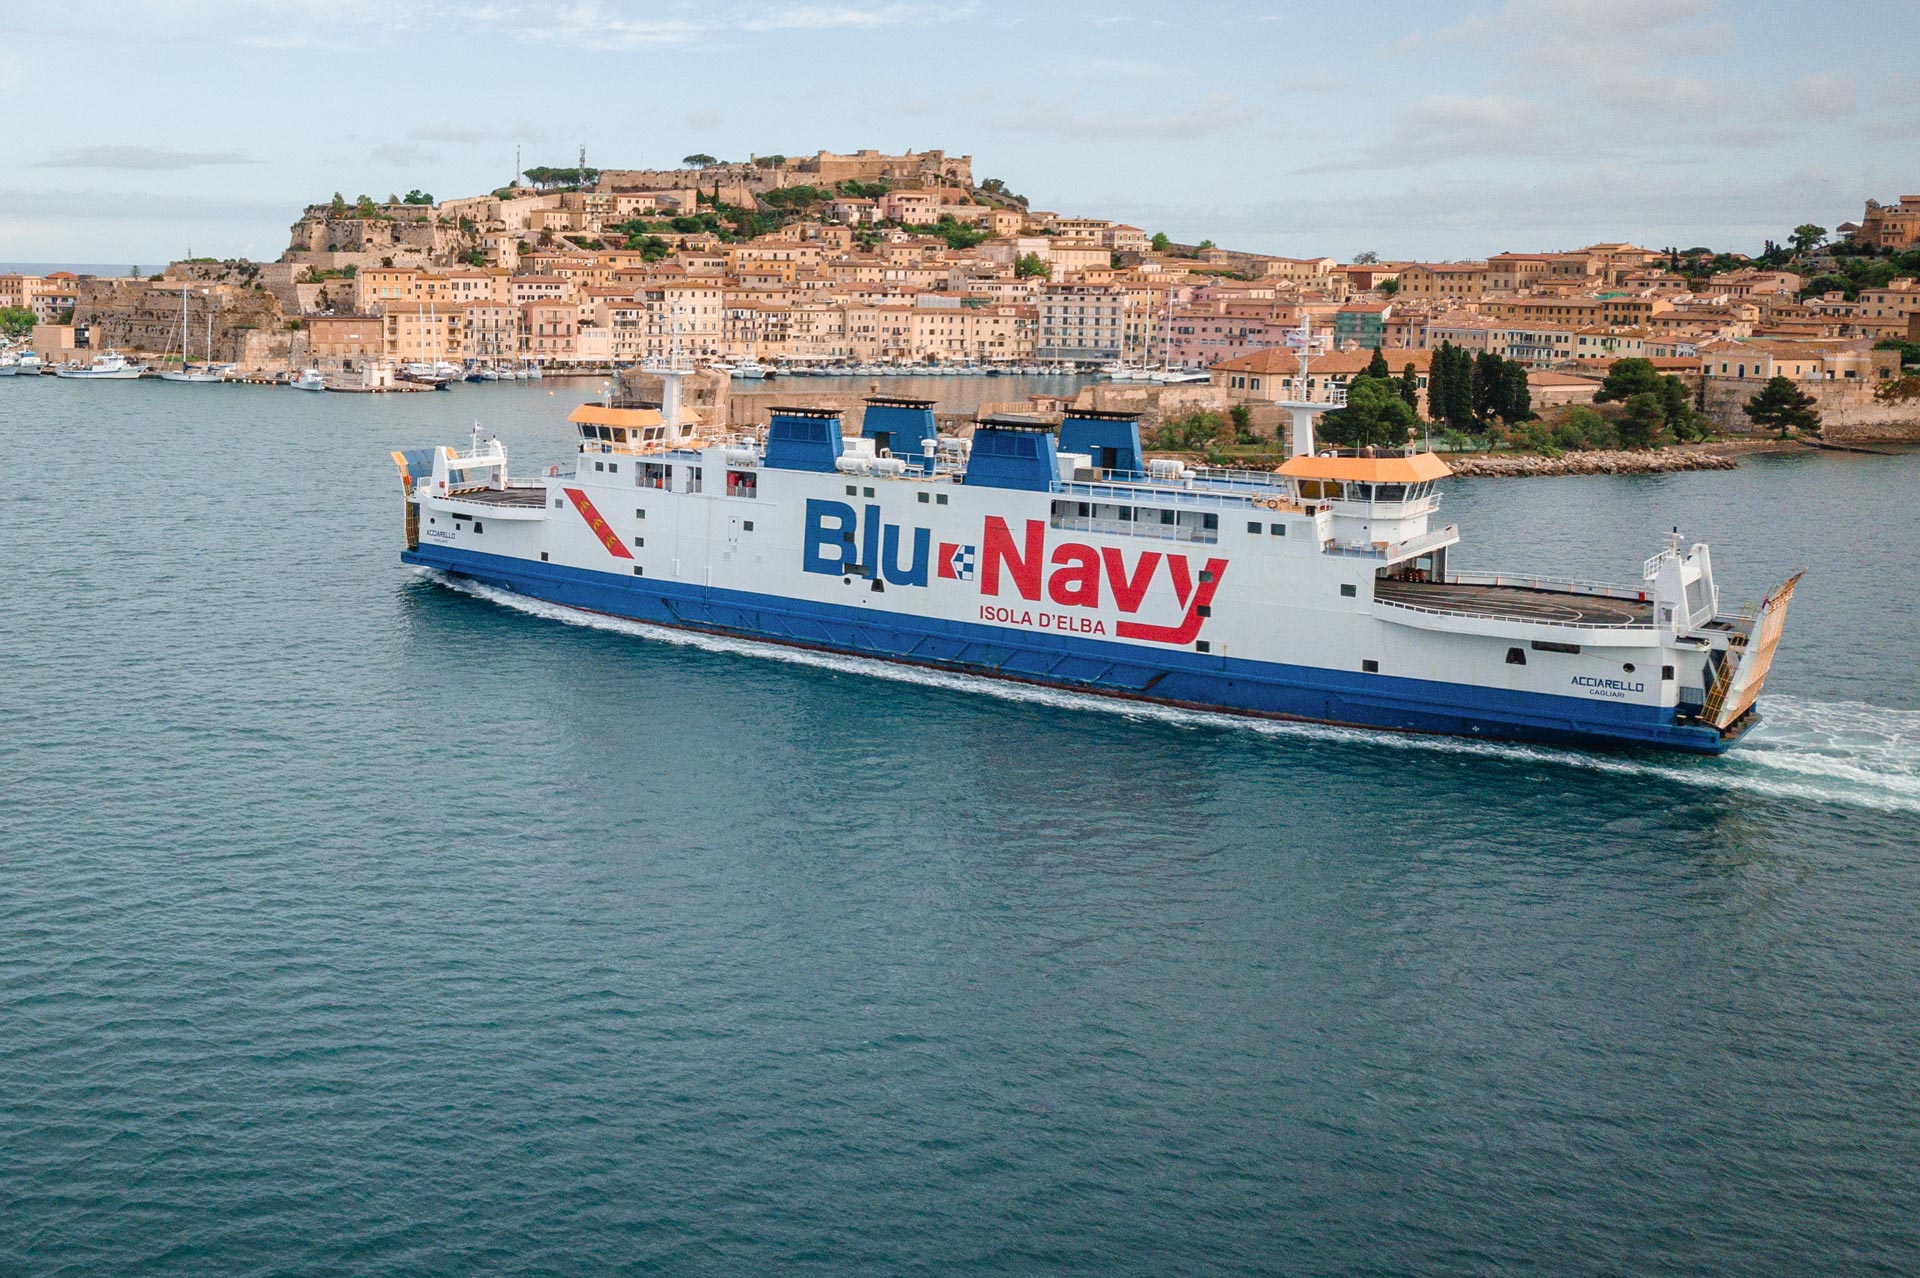 Ferry Blu Navy arriving at Portoferraio Elba island